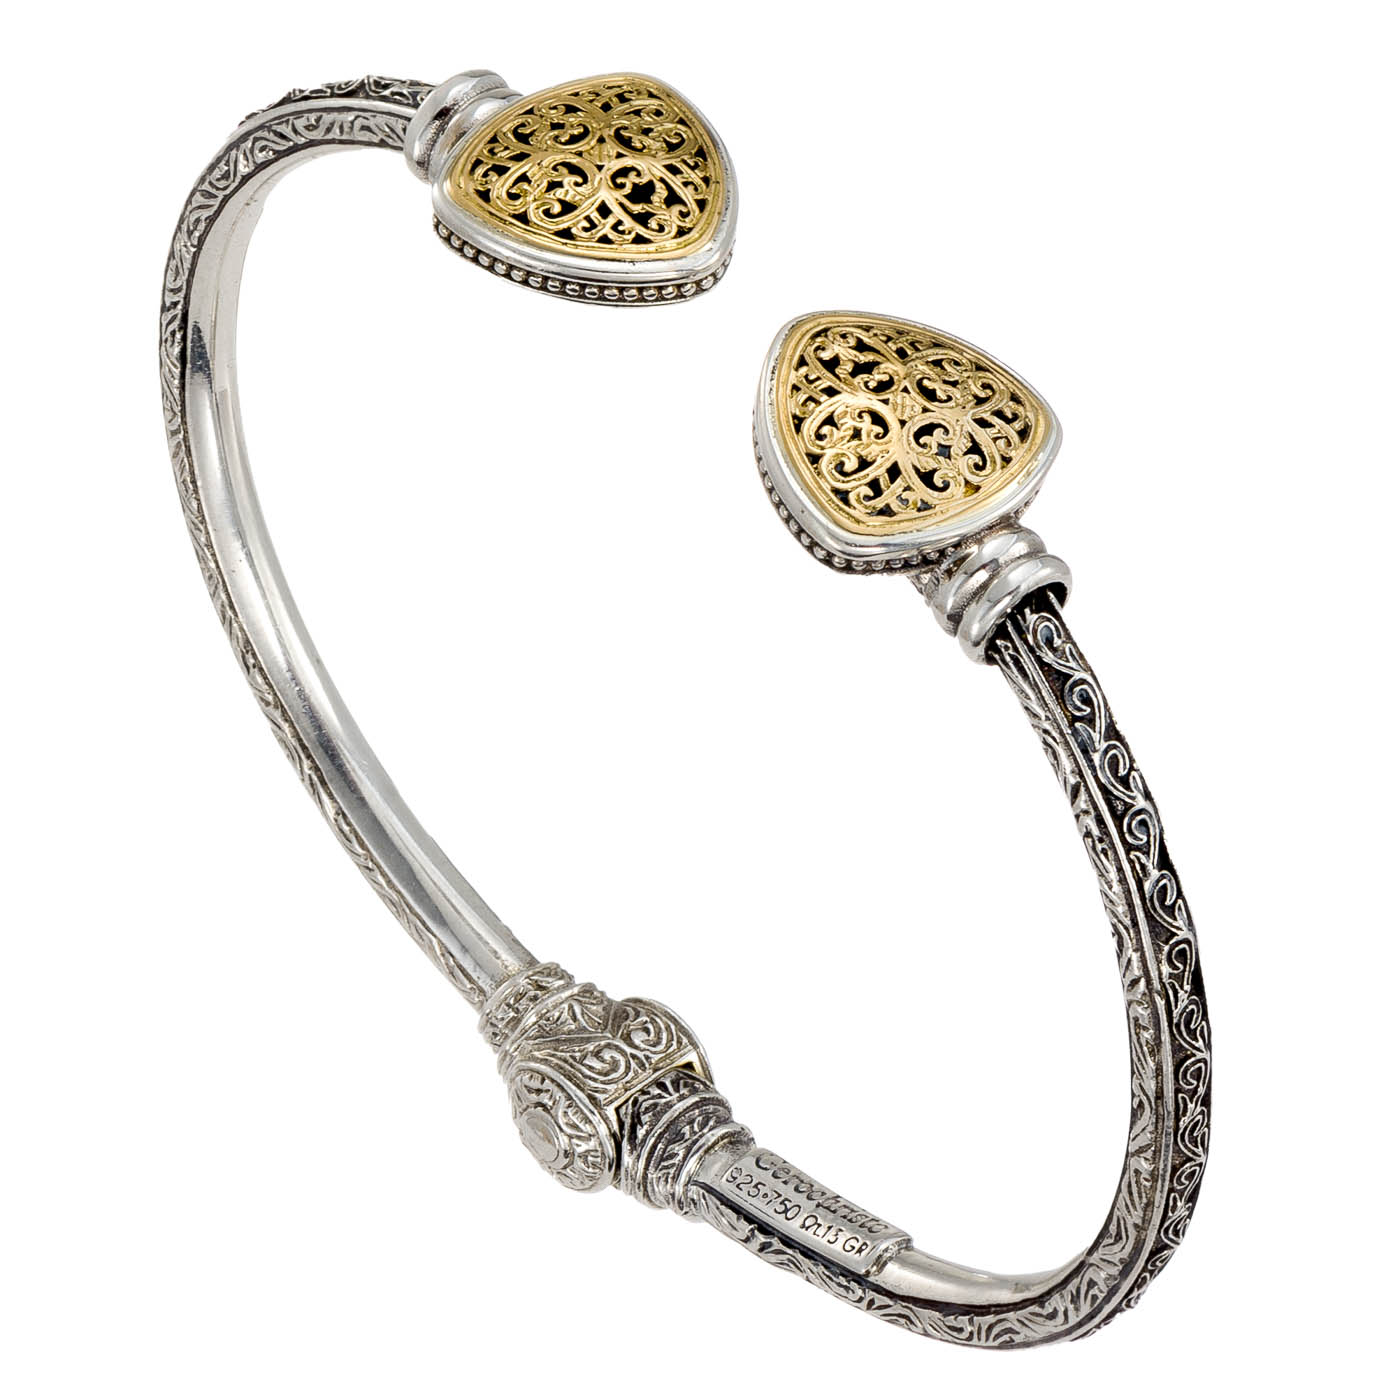 Mediterranean Bracelet in 18K Gold and Sterling Silver